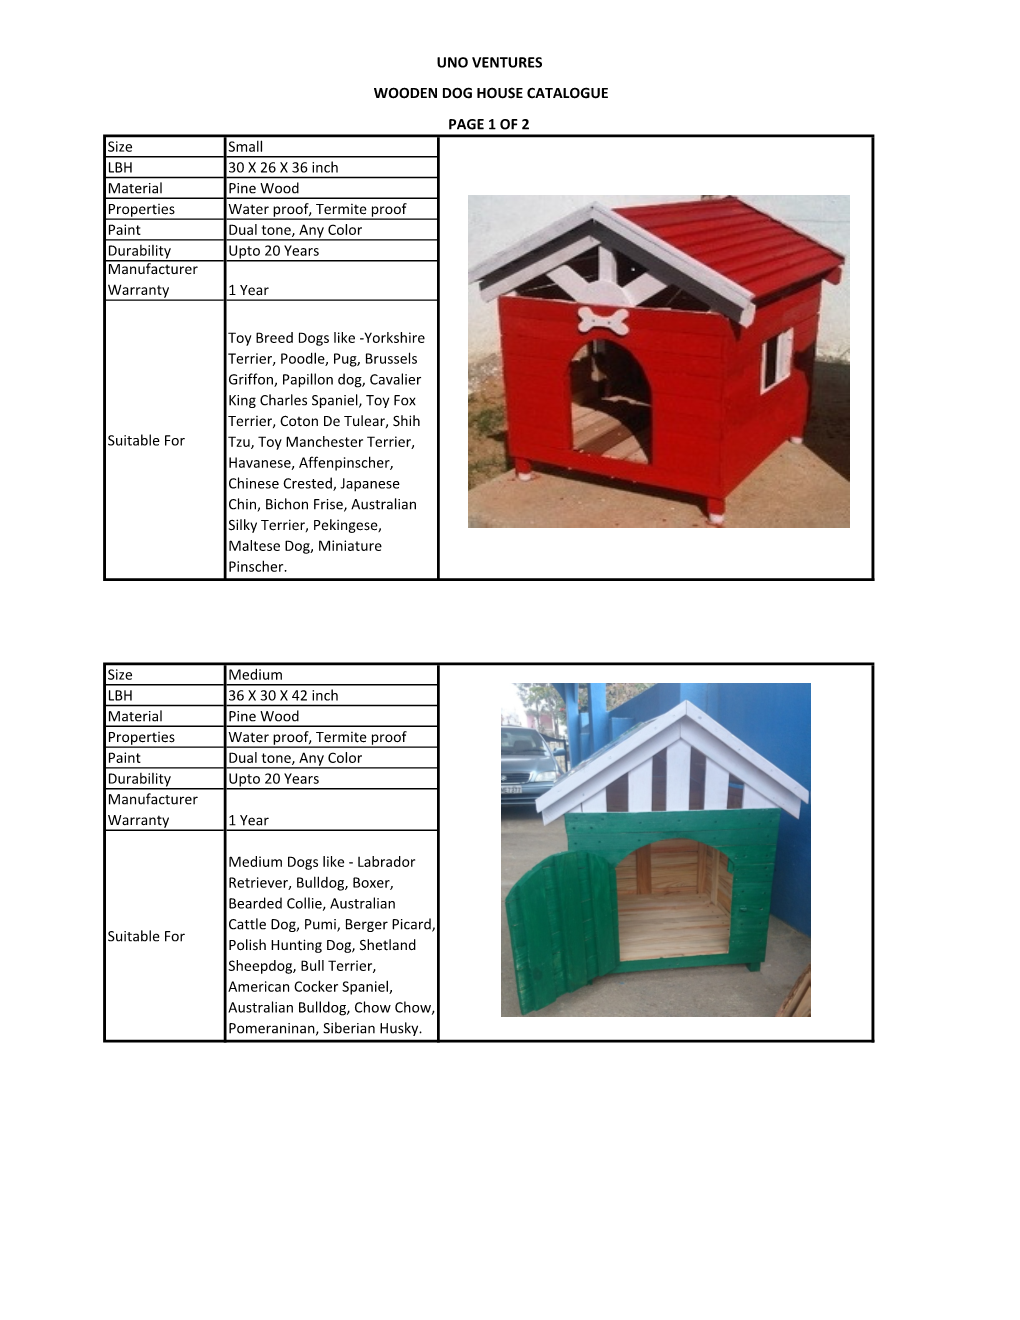 Dog House Catalogue.Xlsx